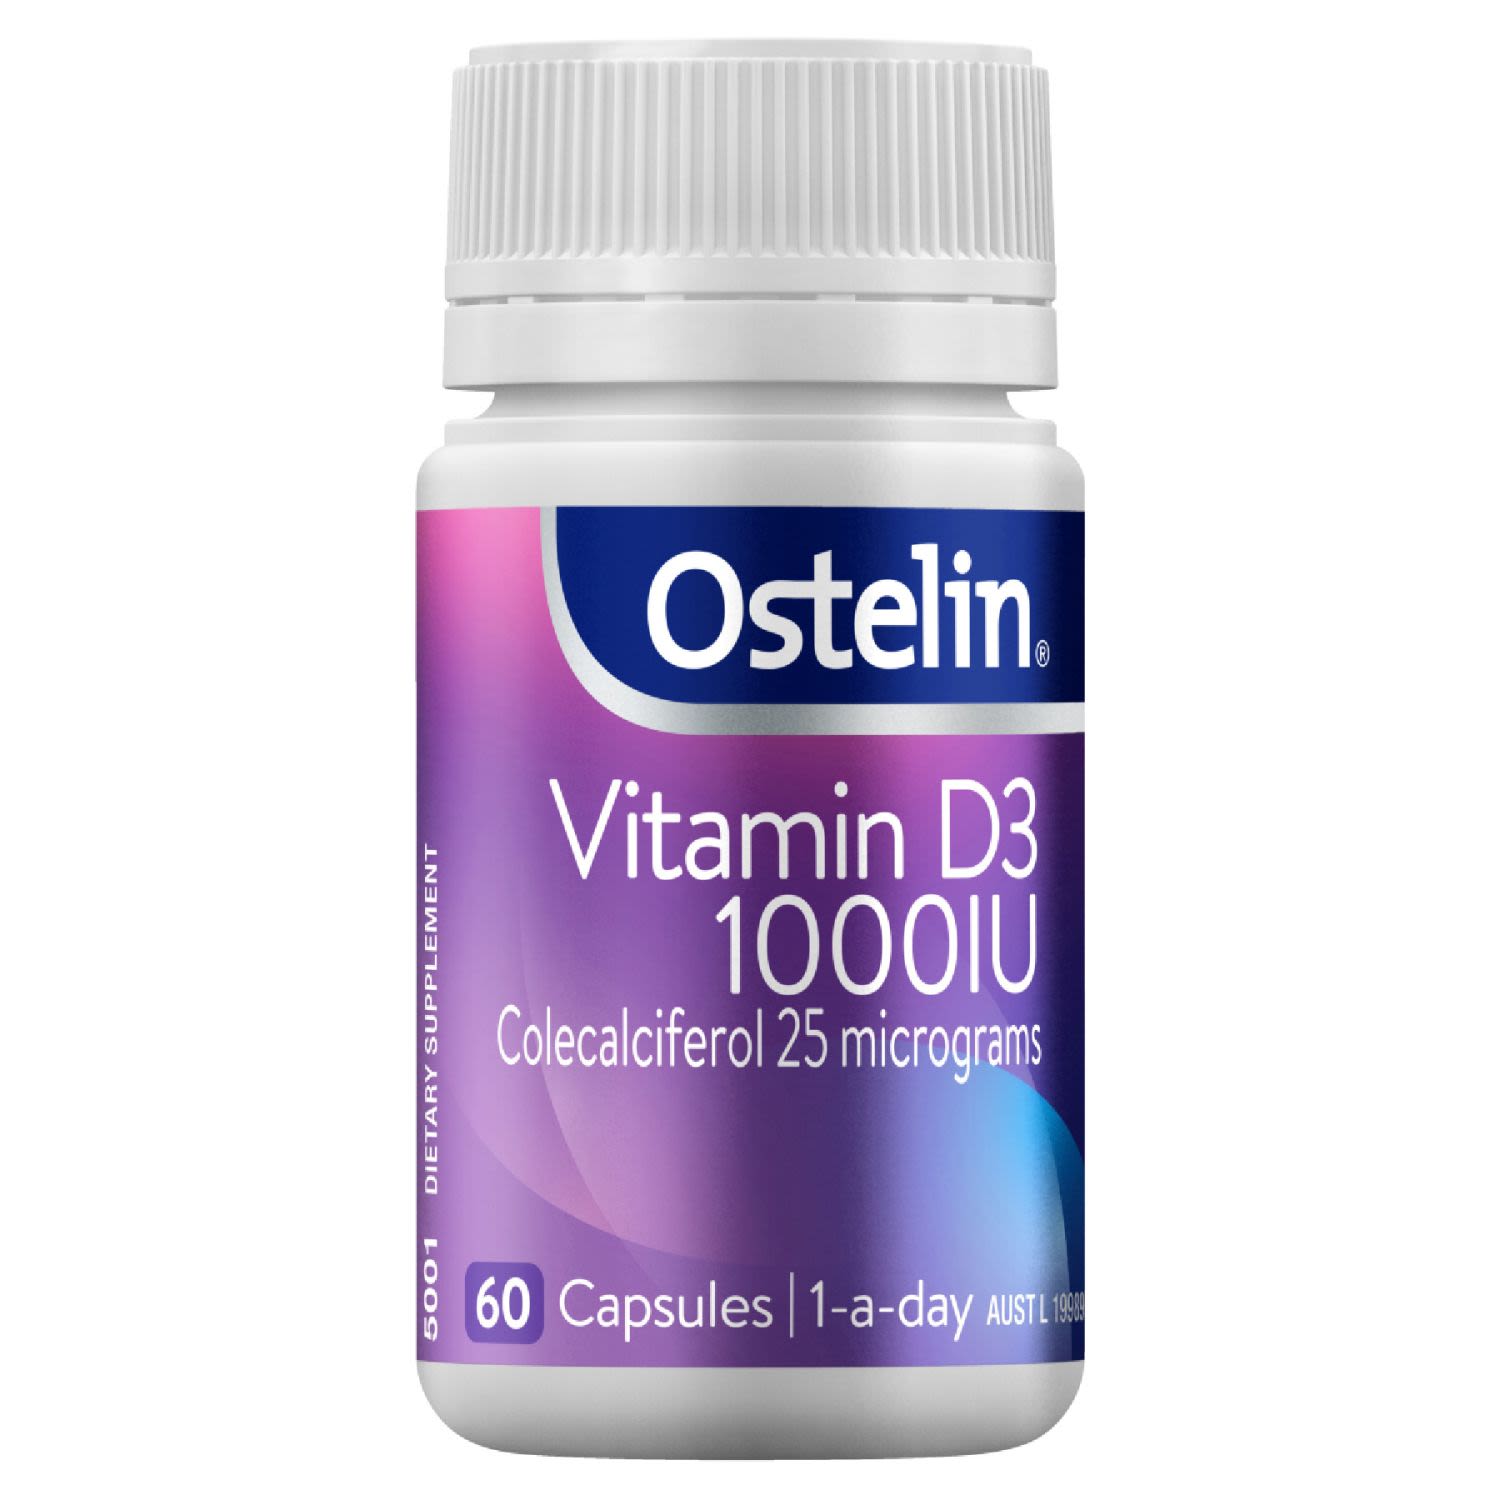 Ostelin Vitamin D3 1000IU Capsules, 60 Each